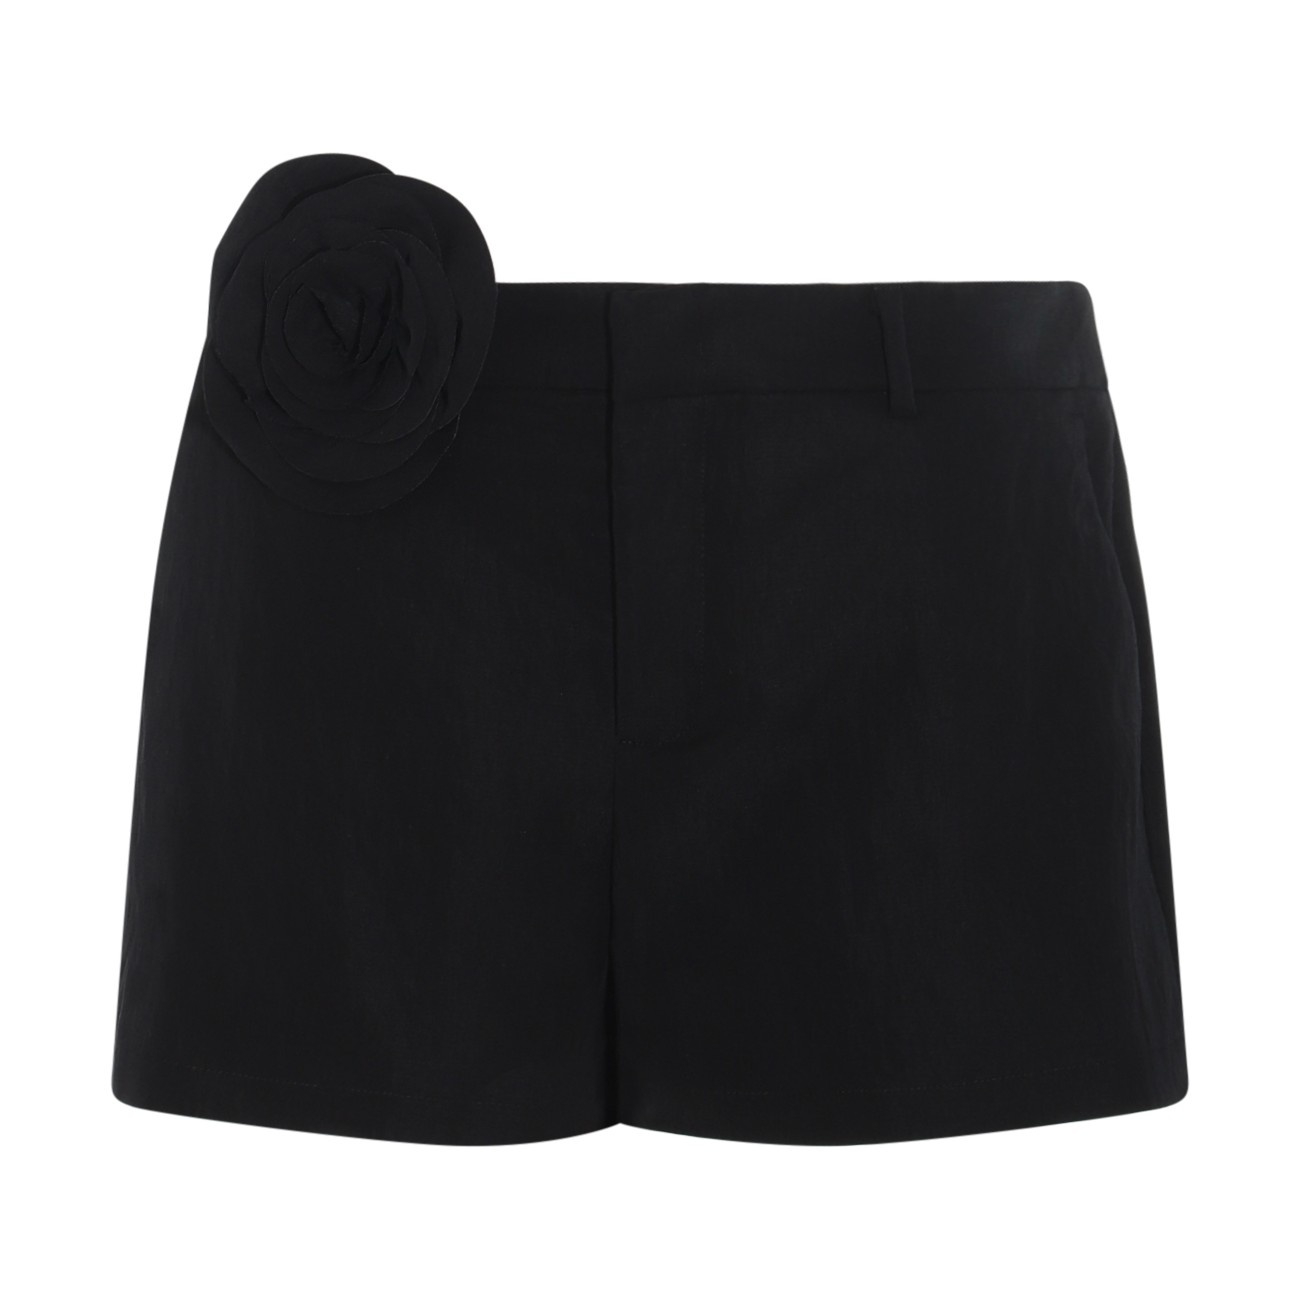 black shorts - 1